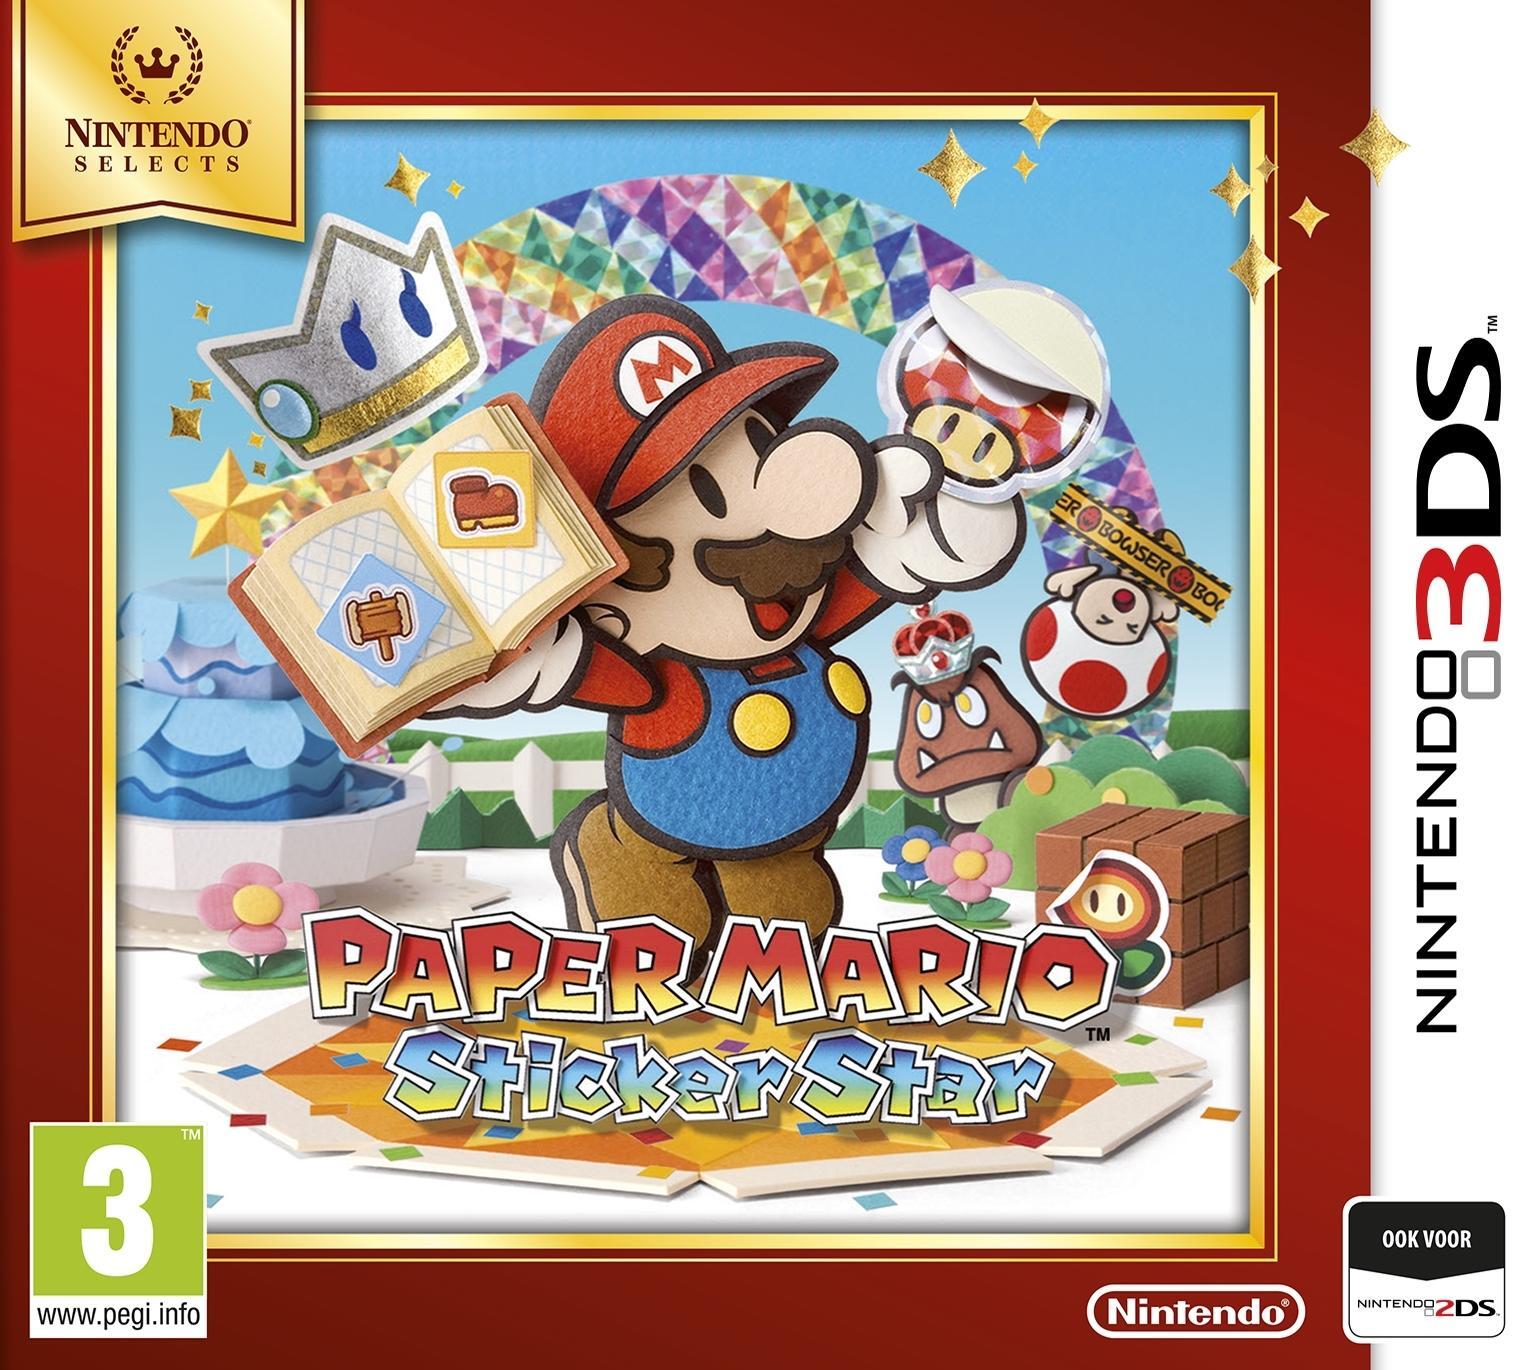 Nintendo Paper Mario Sticker Star Selects) Nintendo 3DS